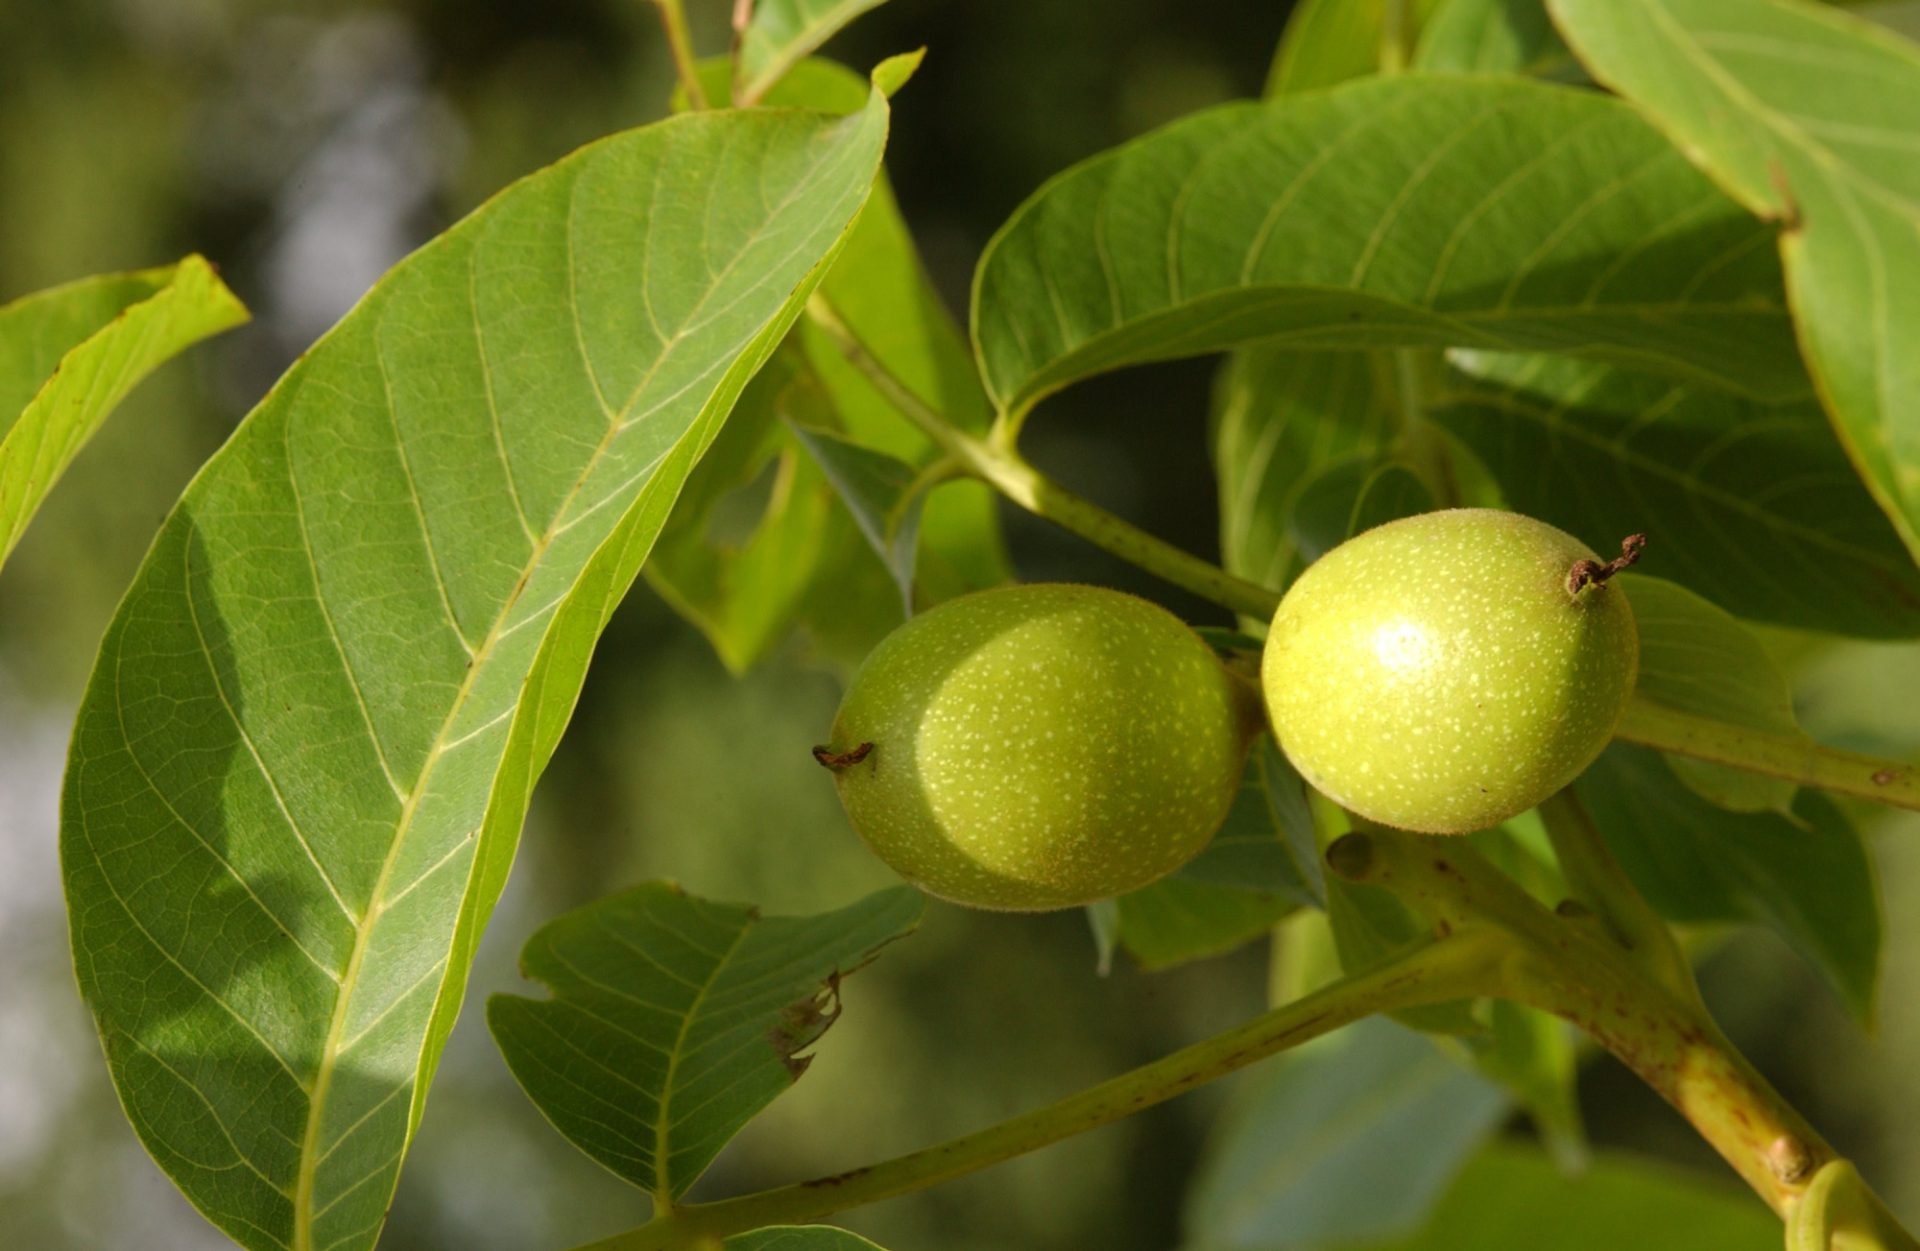 Common walnut fruit.